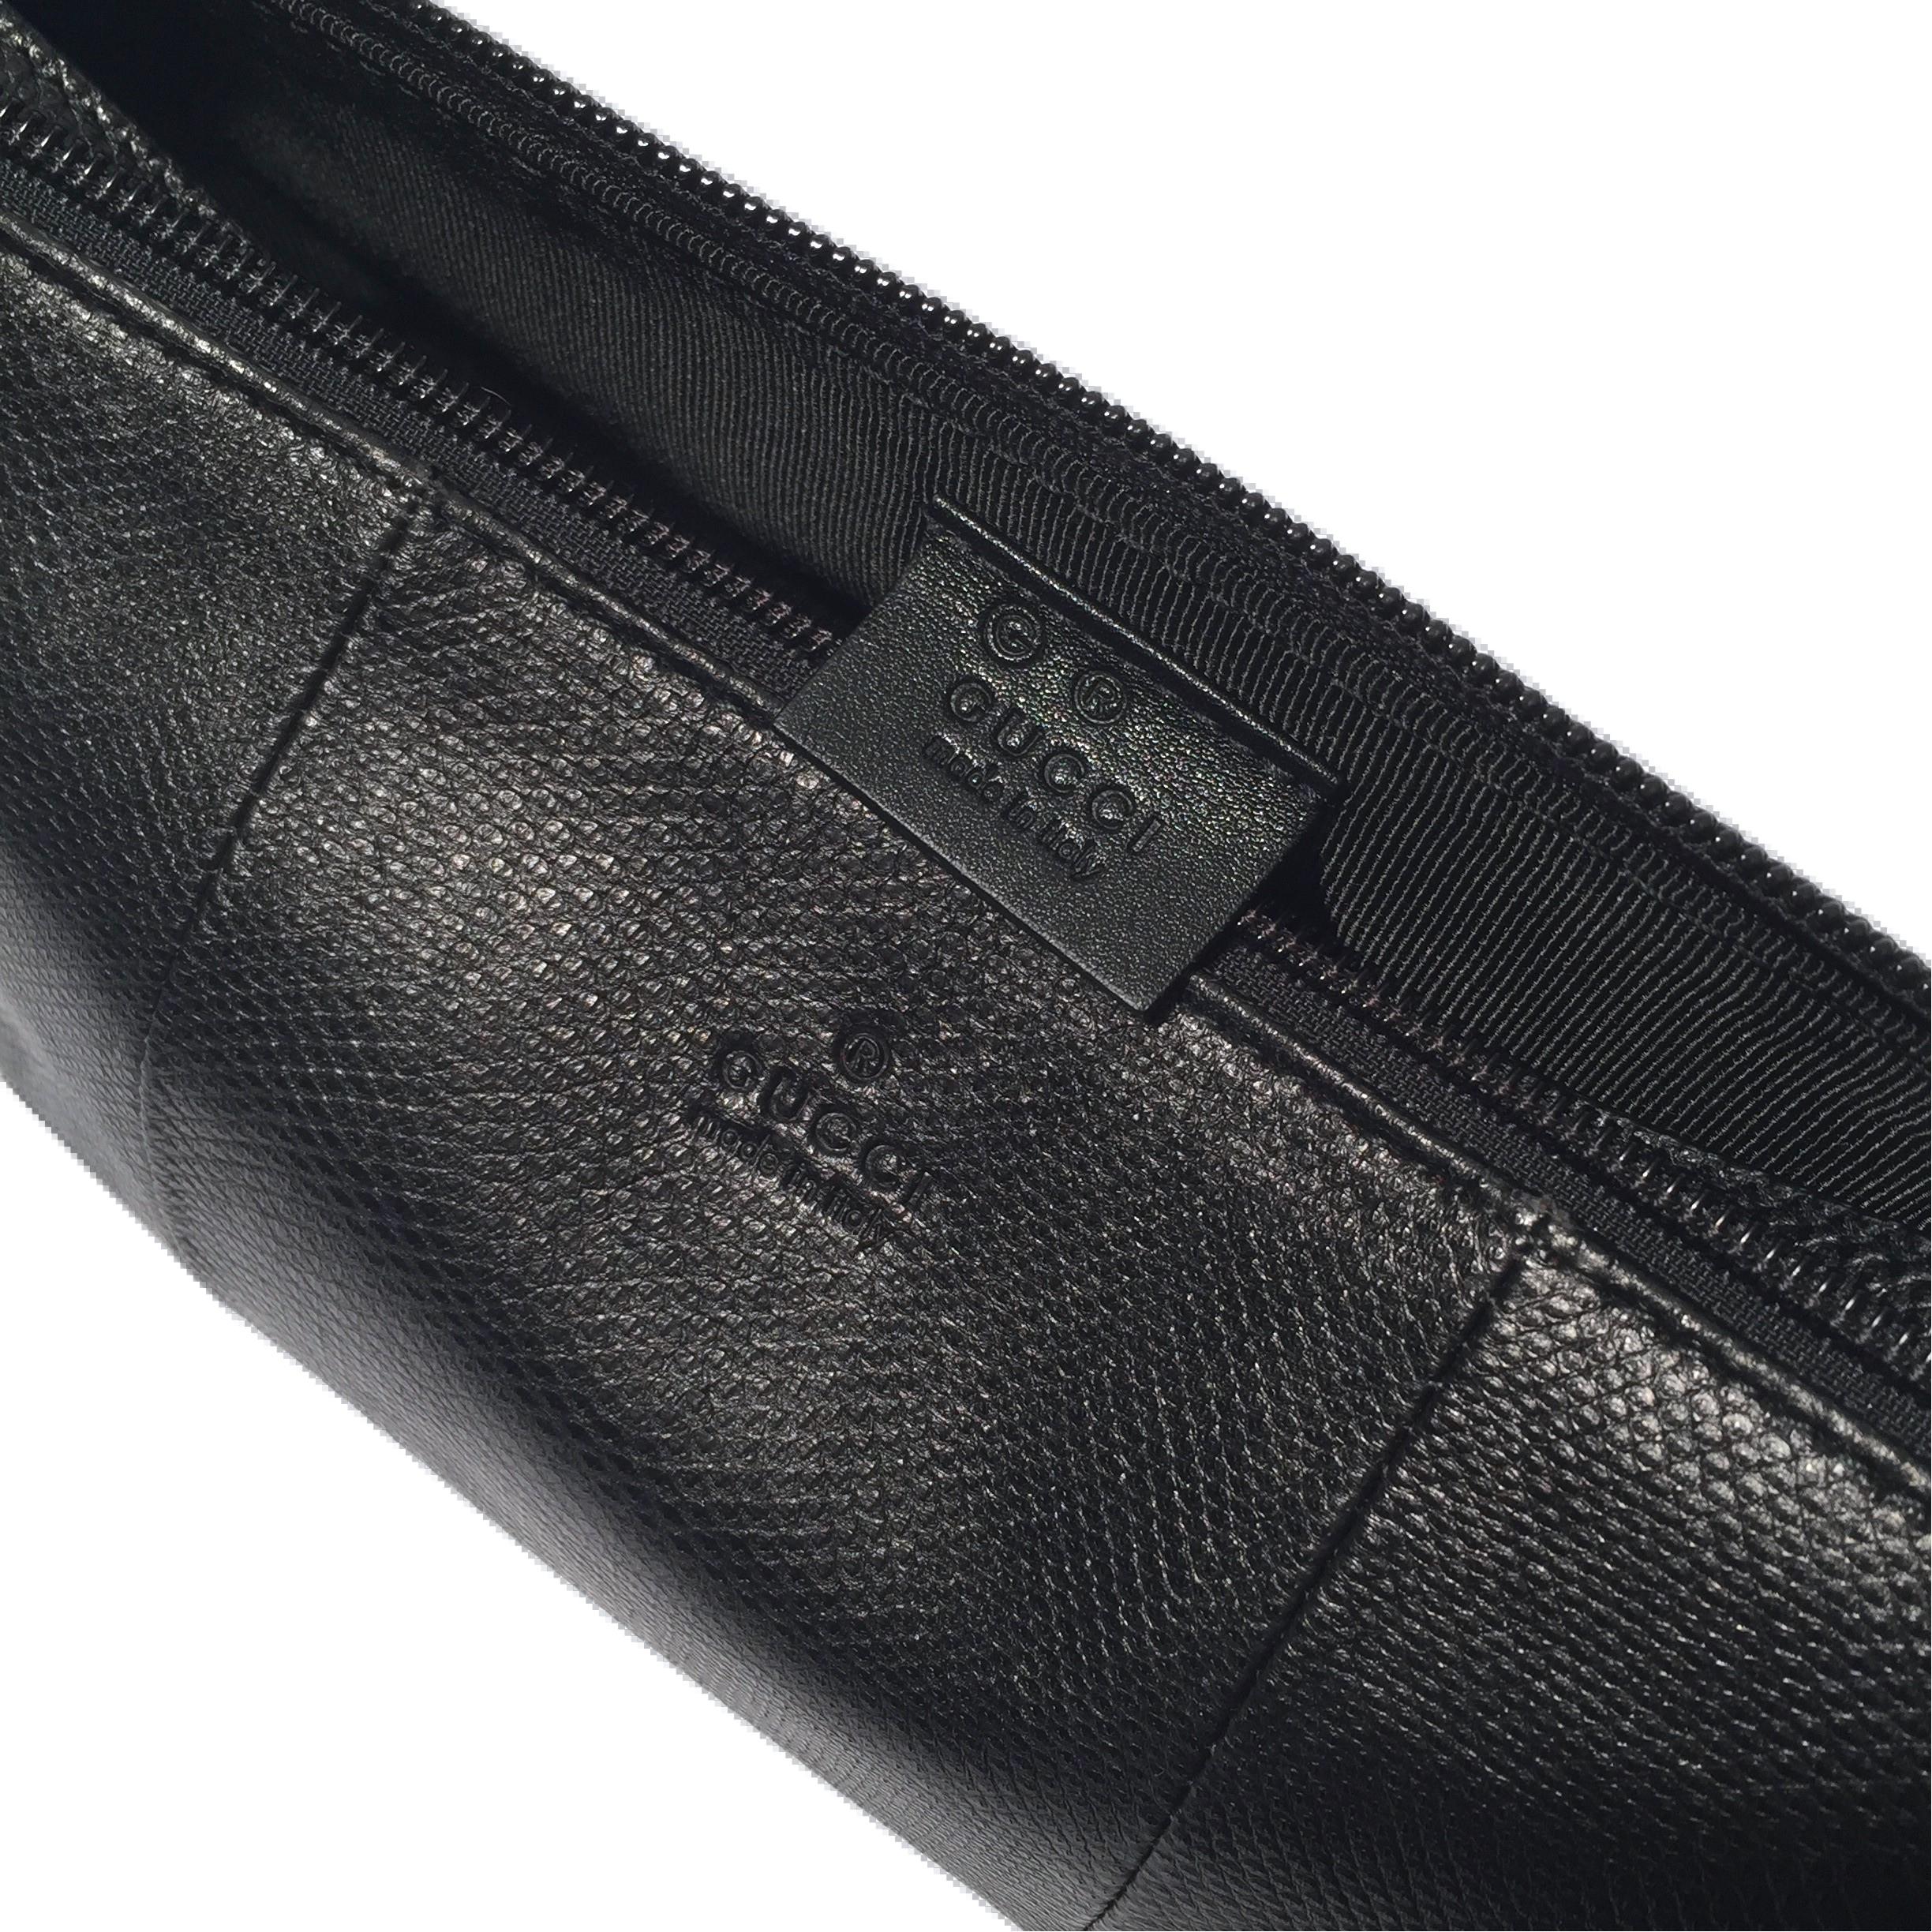 New Gucci Black Lizard Baguette Bag Purse 8